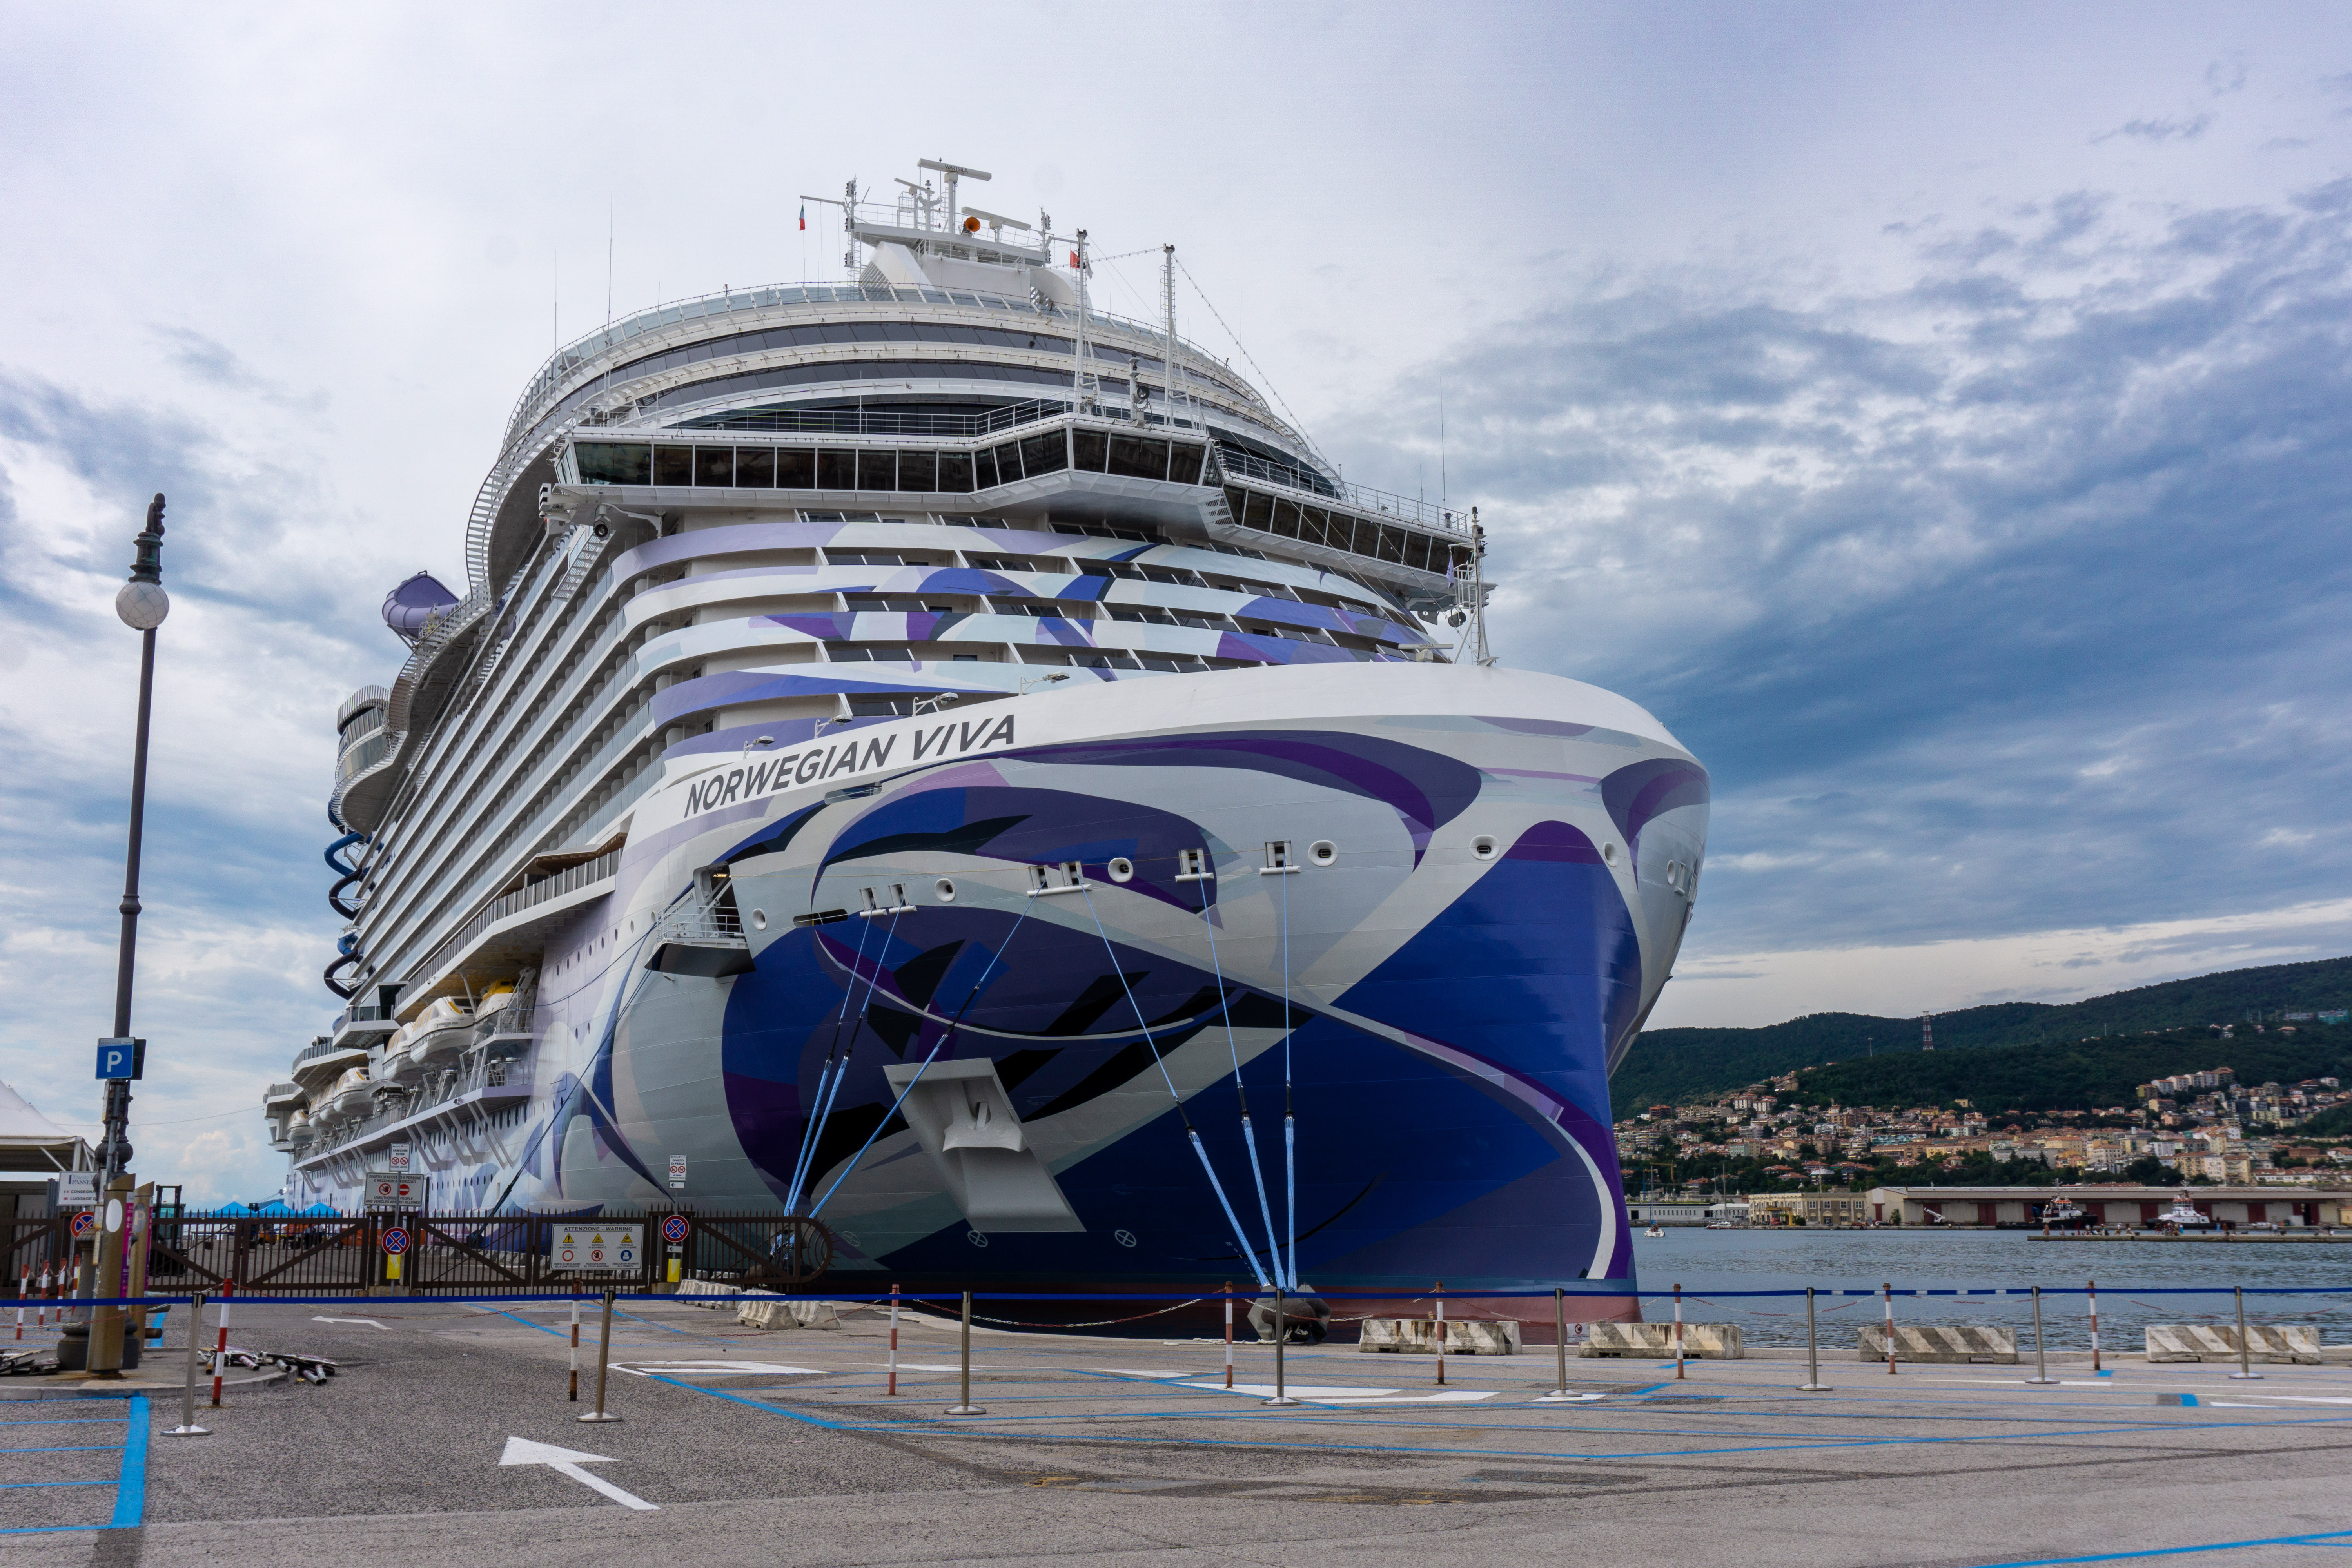 Norwegian Viva Cruise Ship | First-hand Expert Review